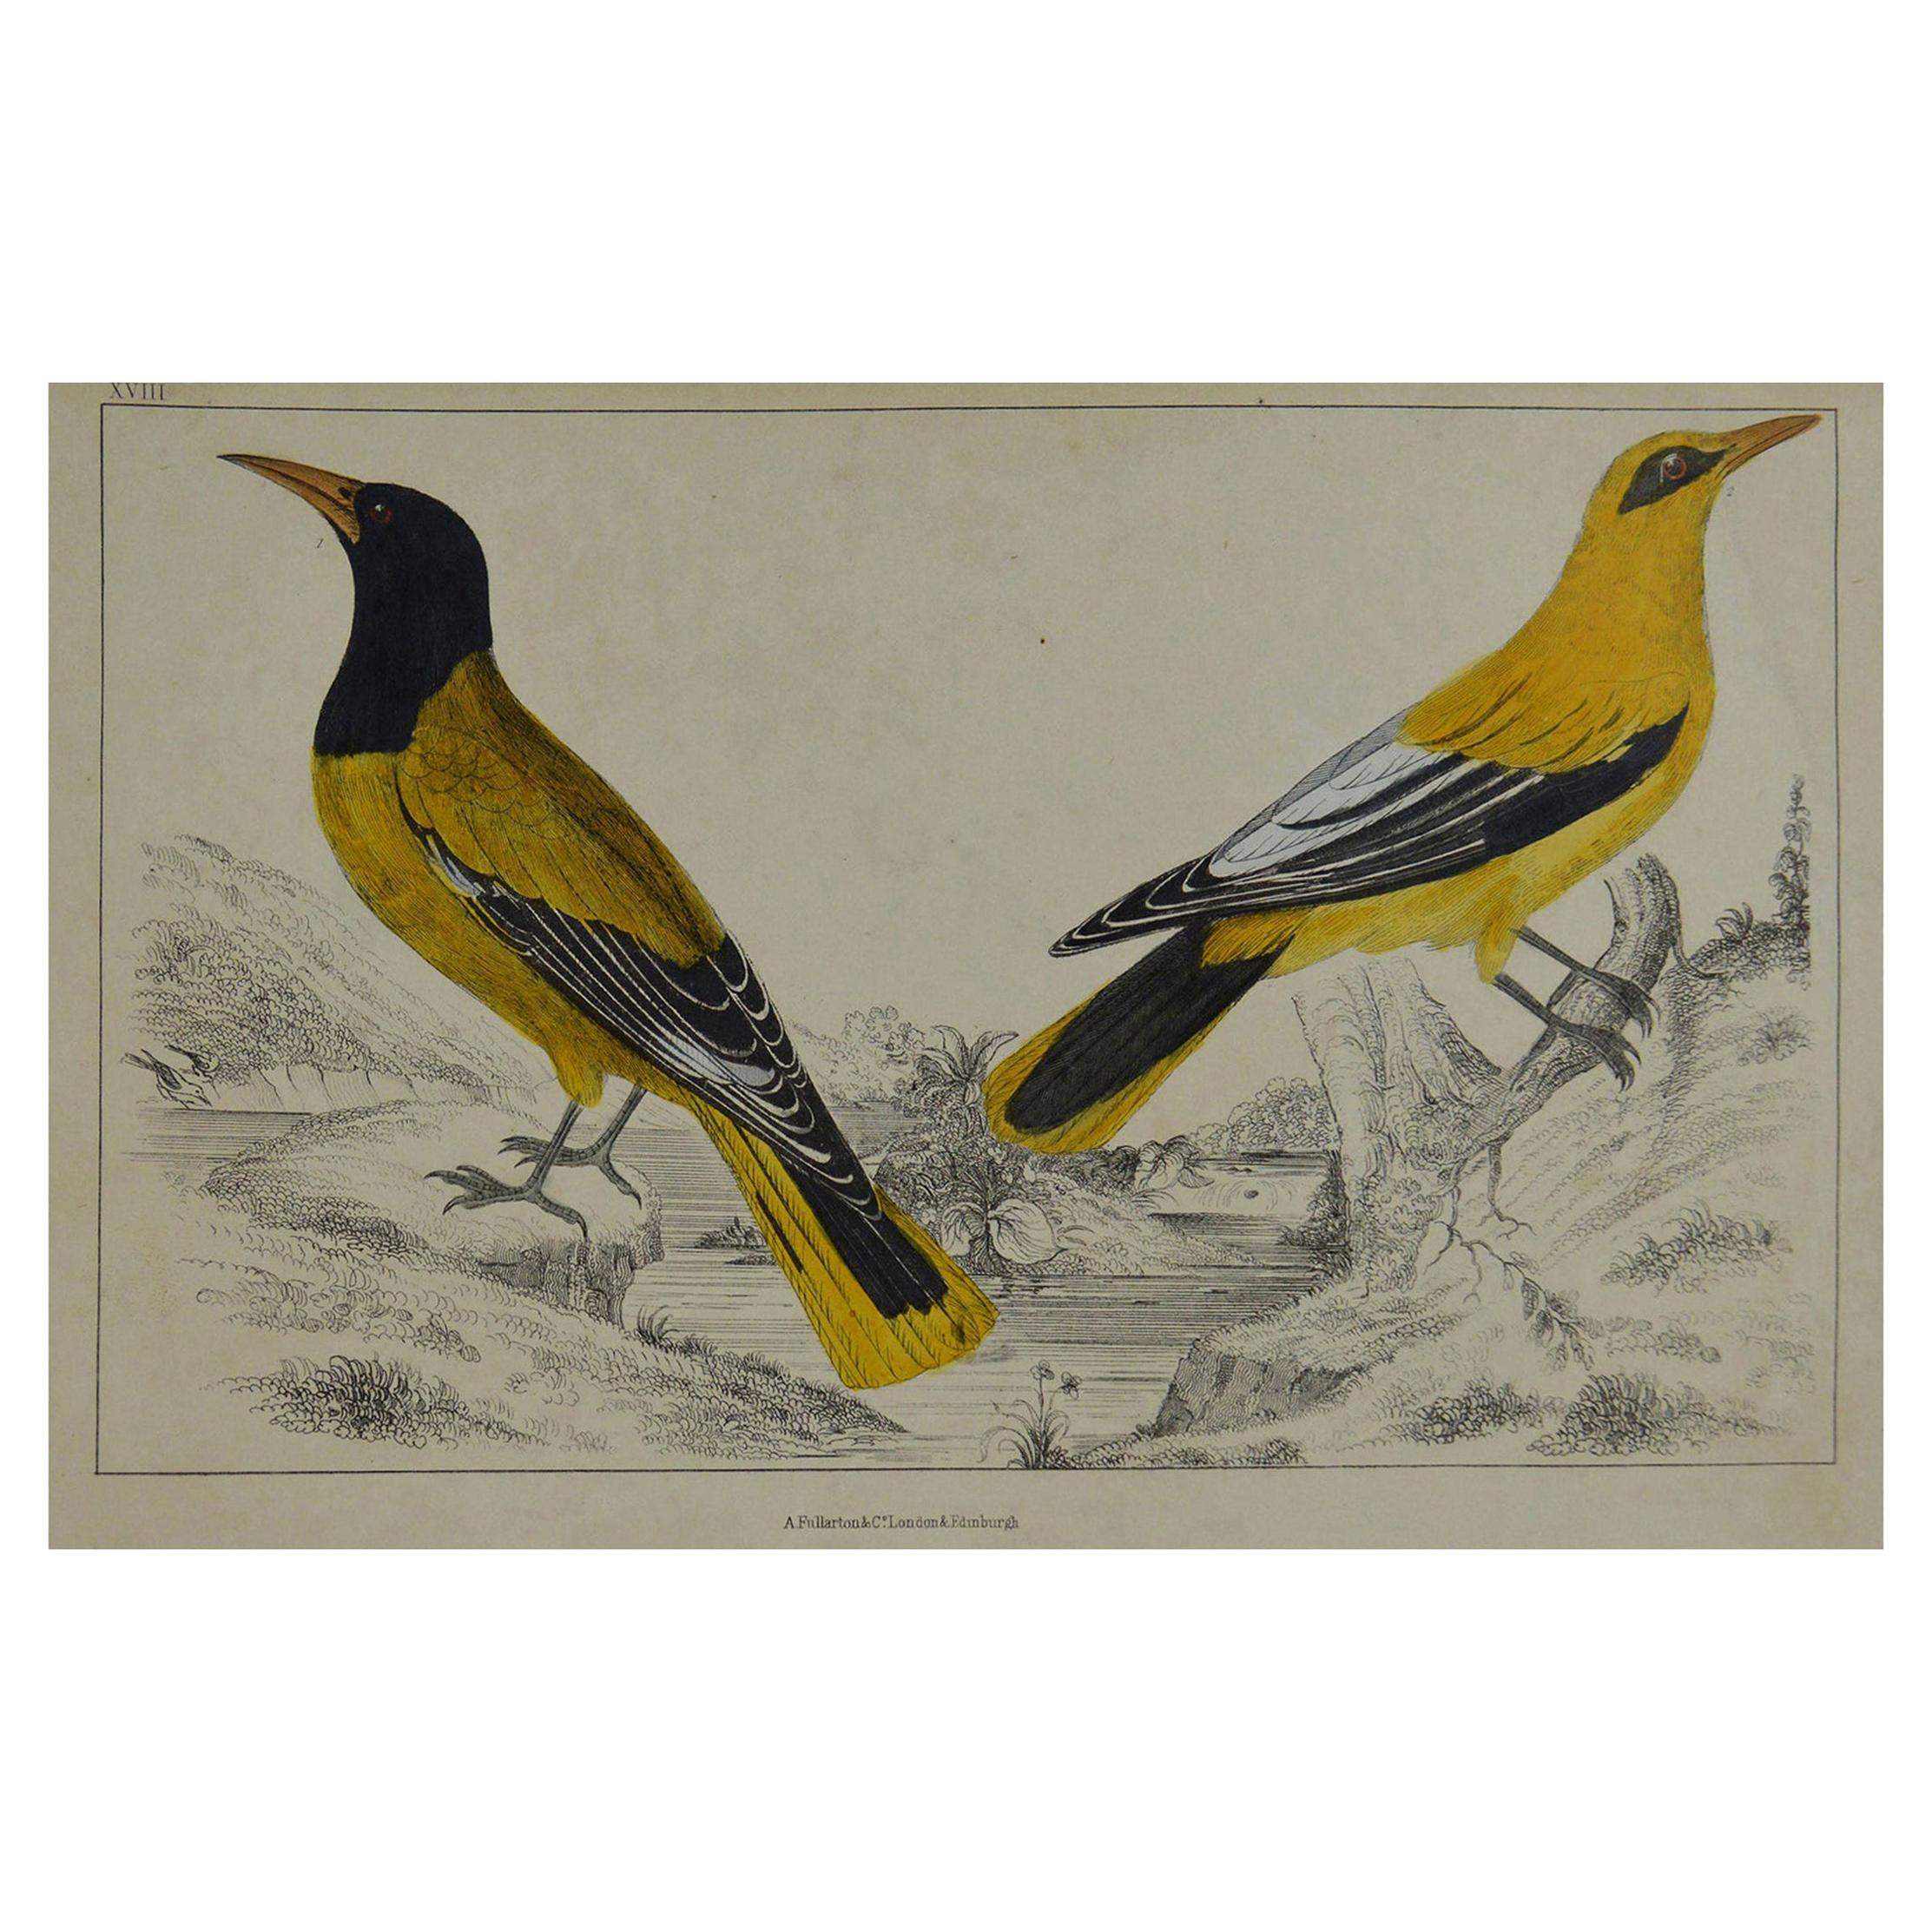 Original Antique Print of Golden Oriole, 1847 'Unframed'